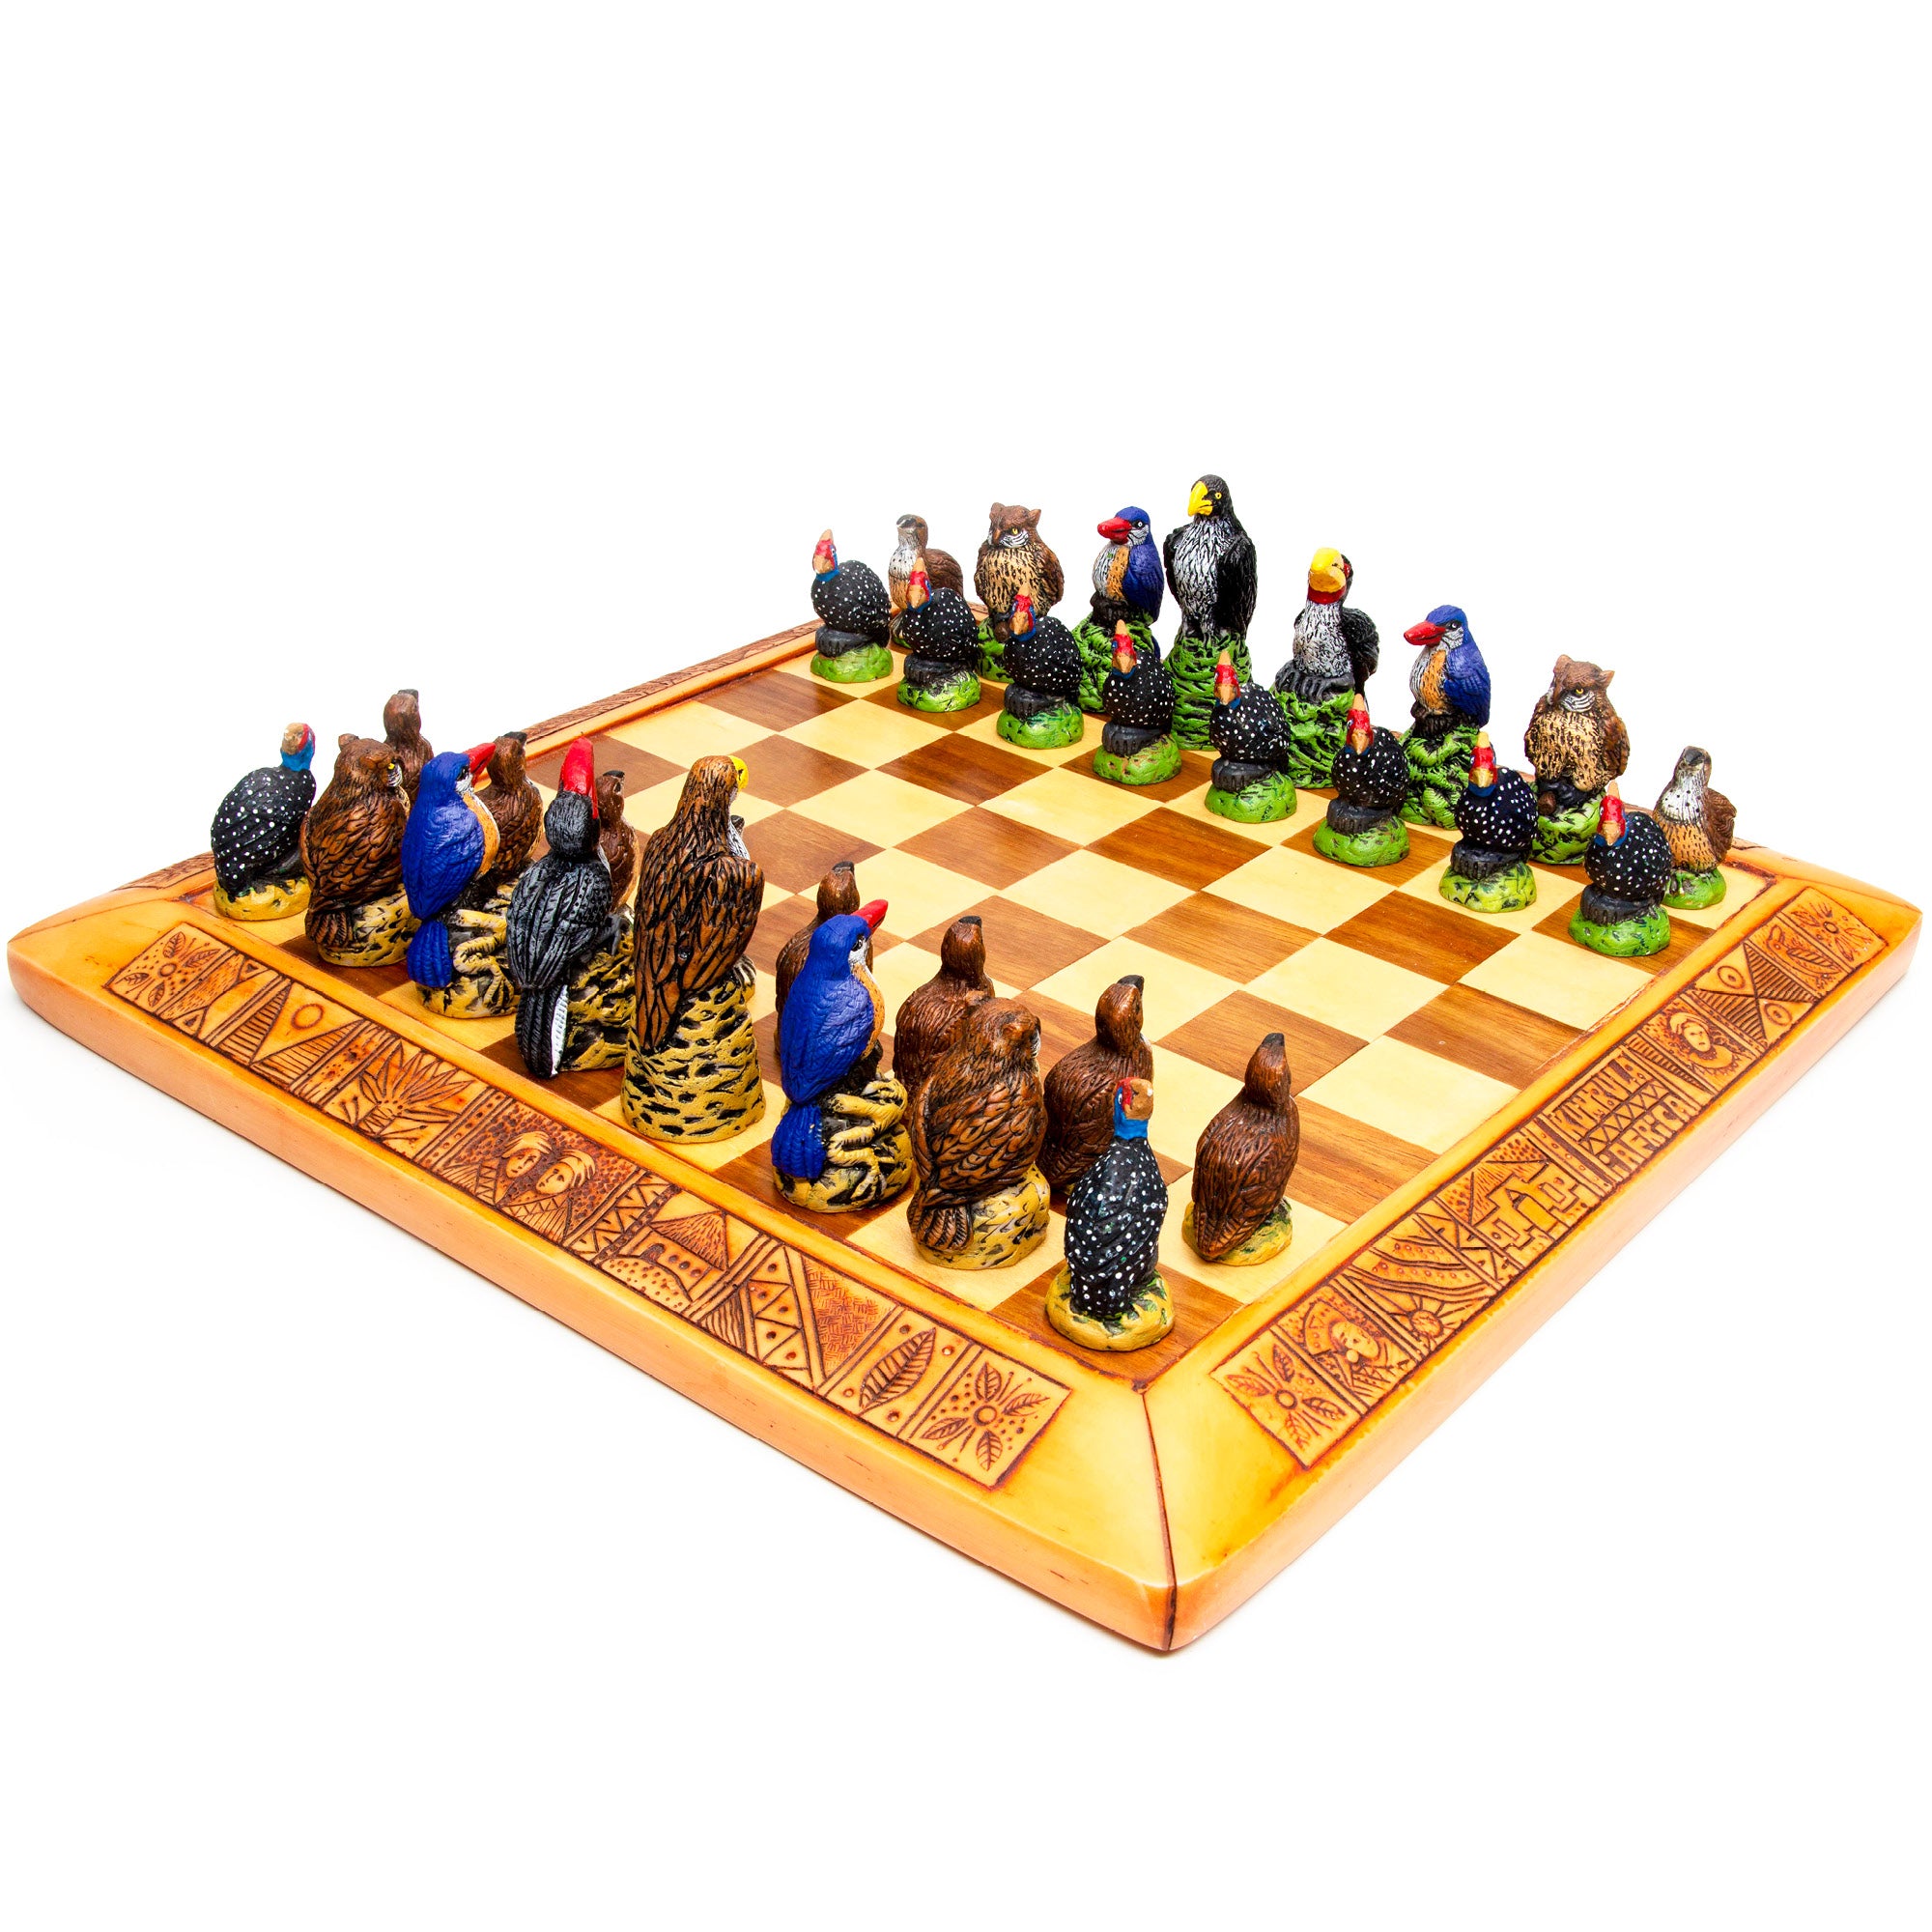 Mini Chess Online